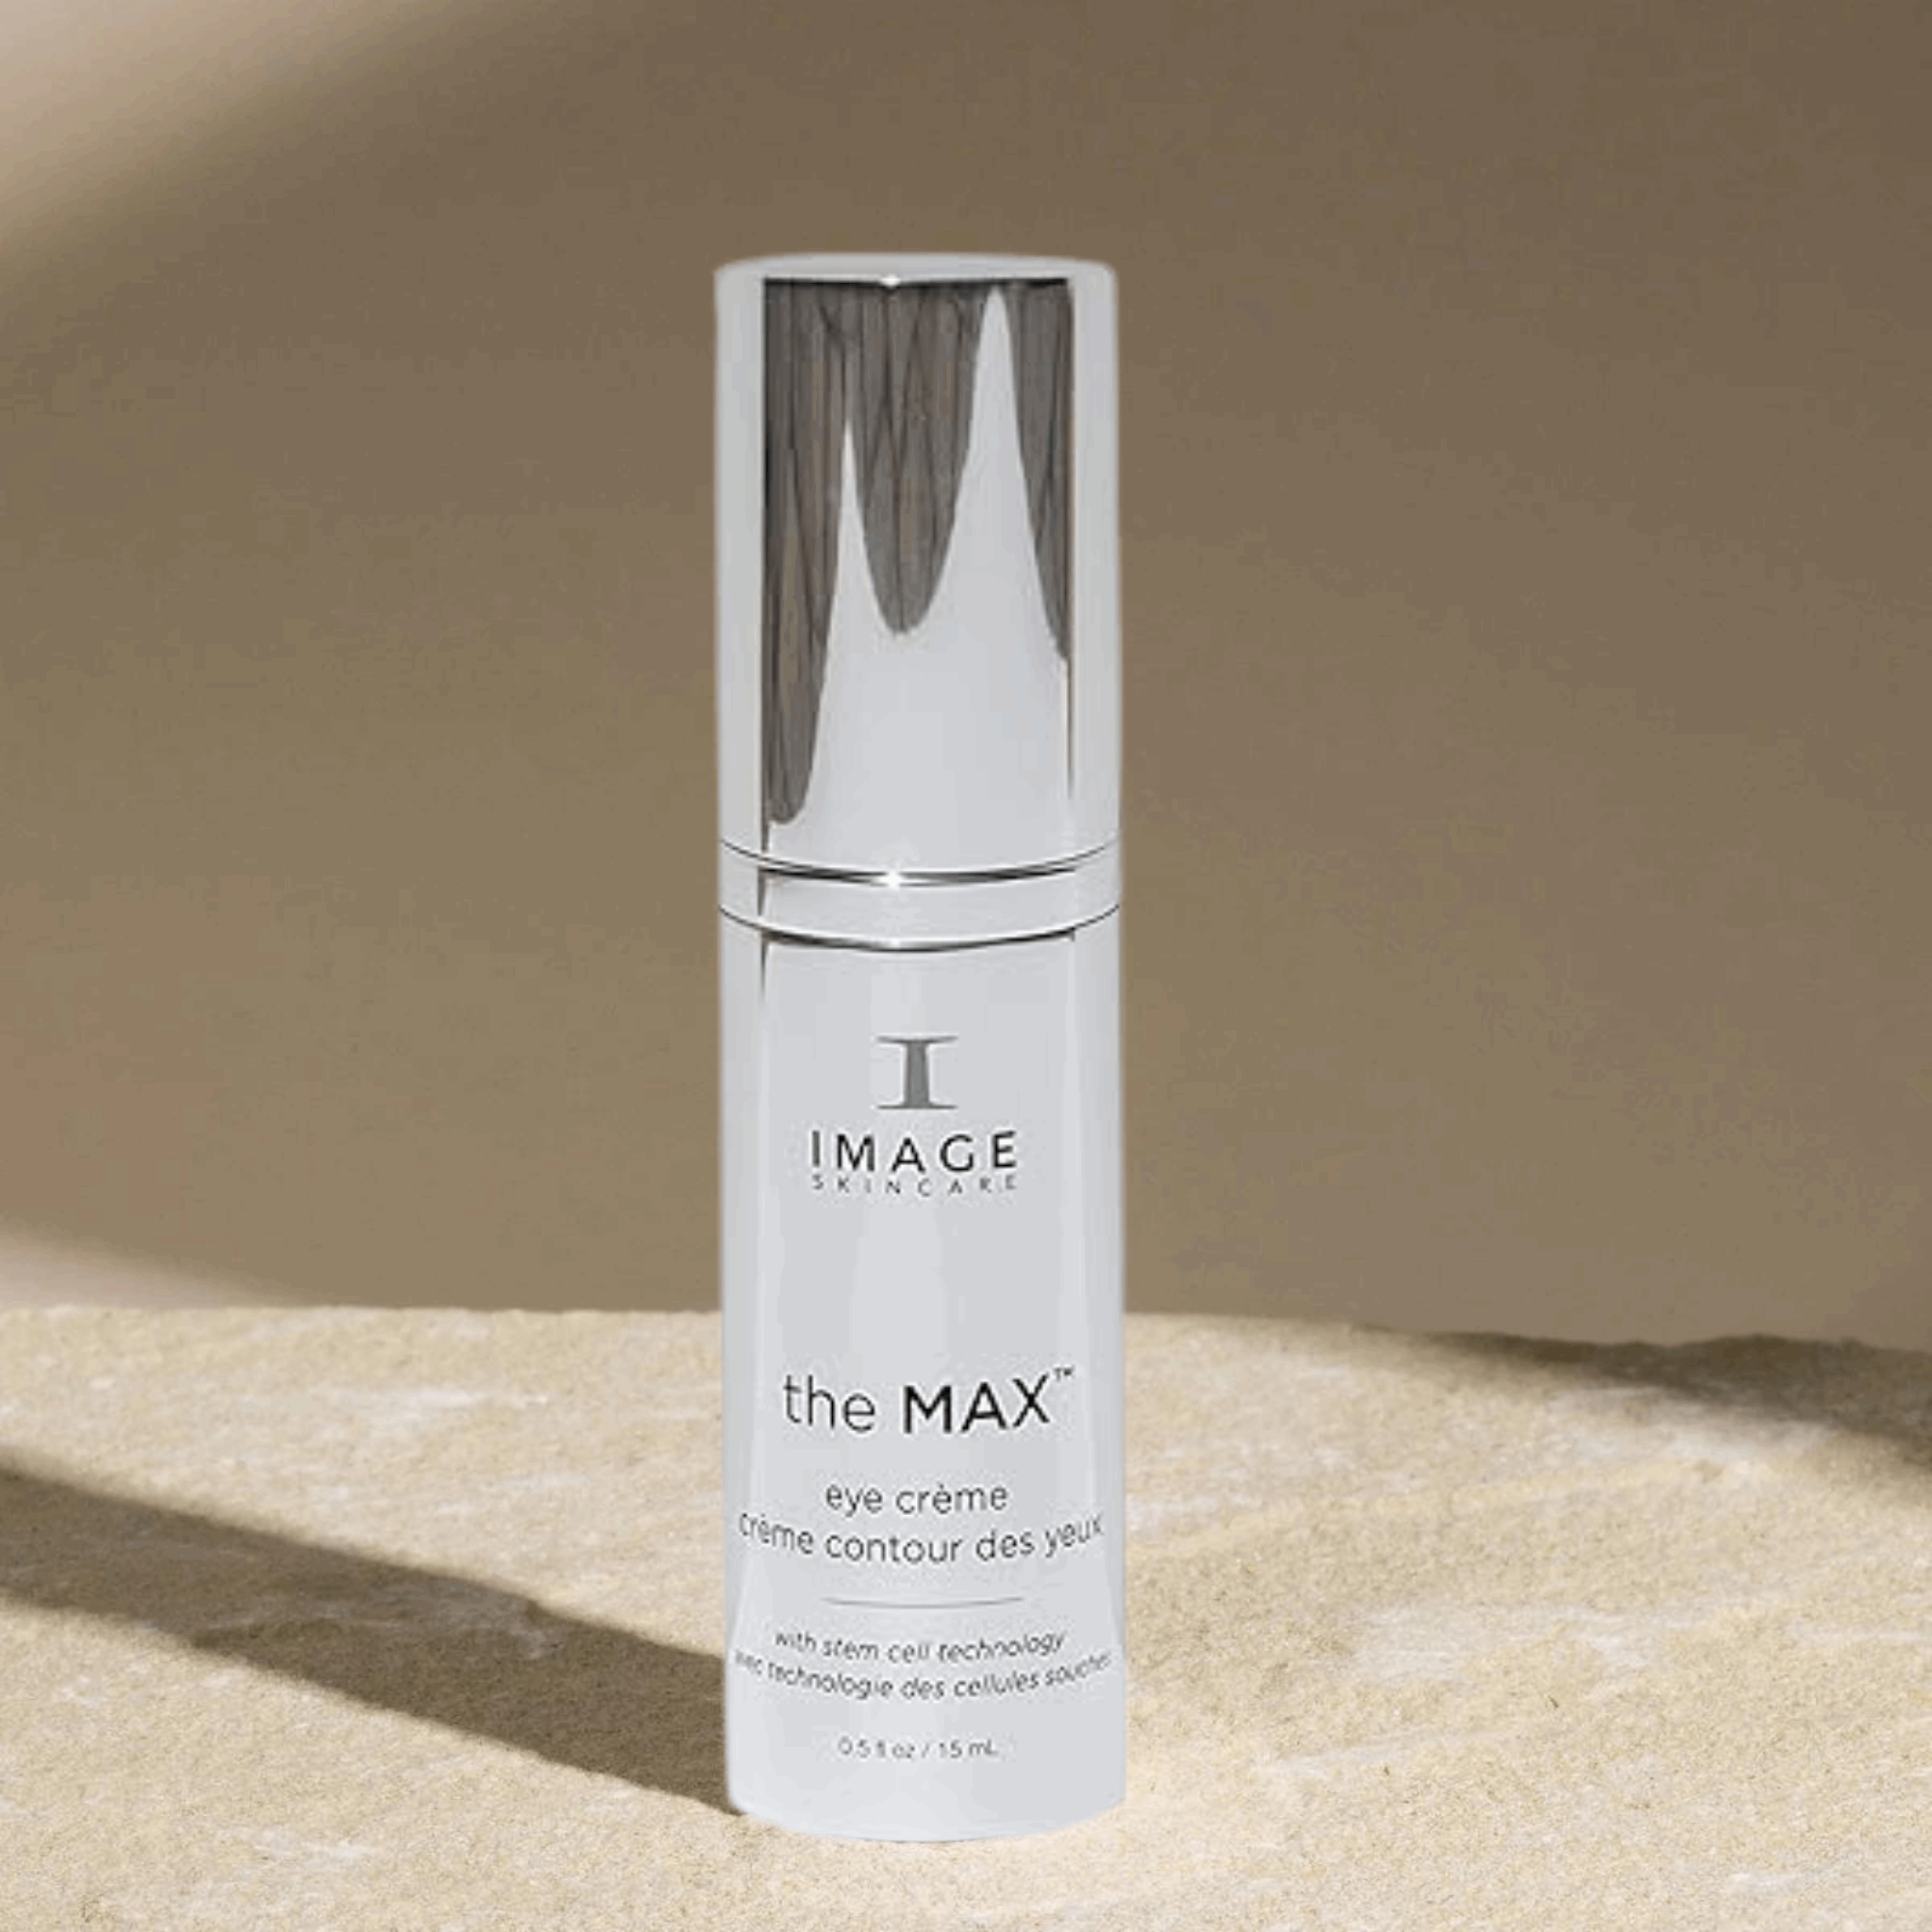 The MAX Eye Creme Image Skincare